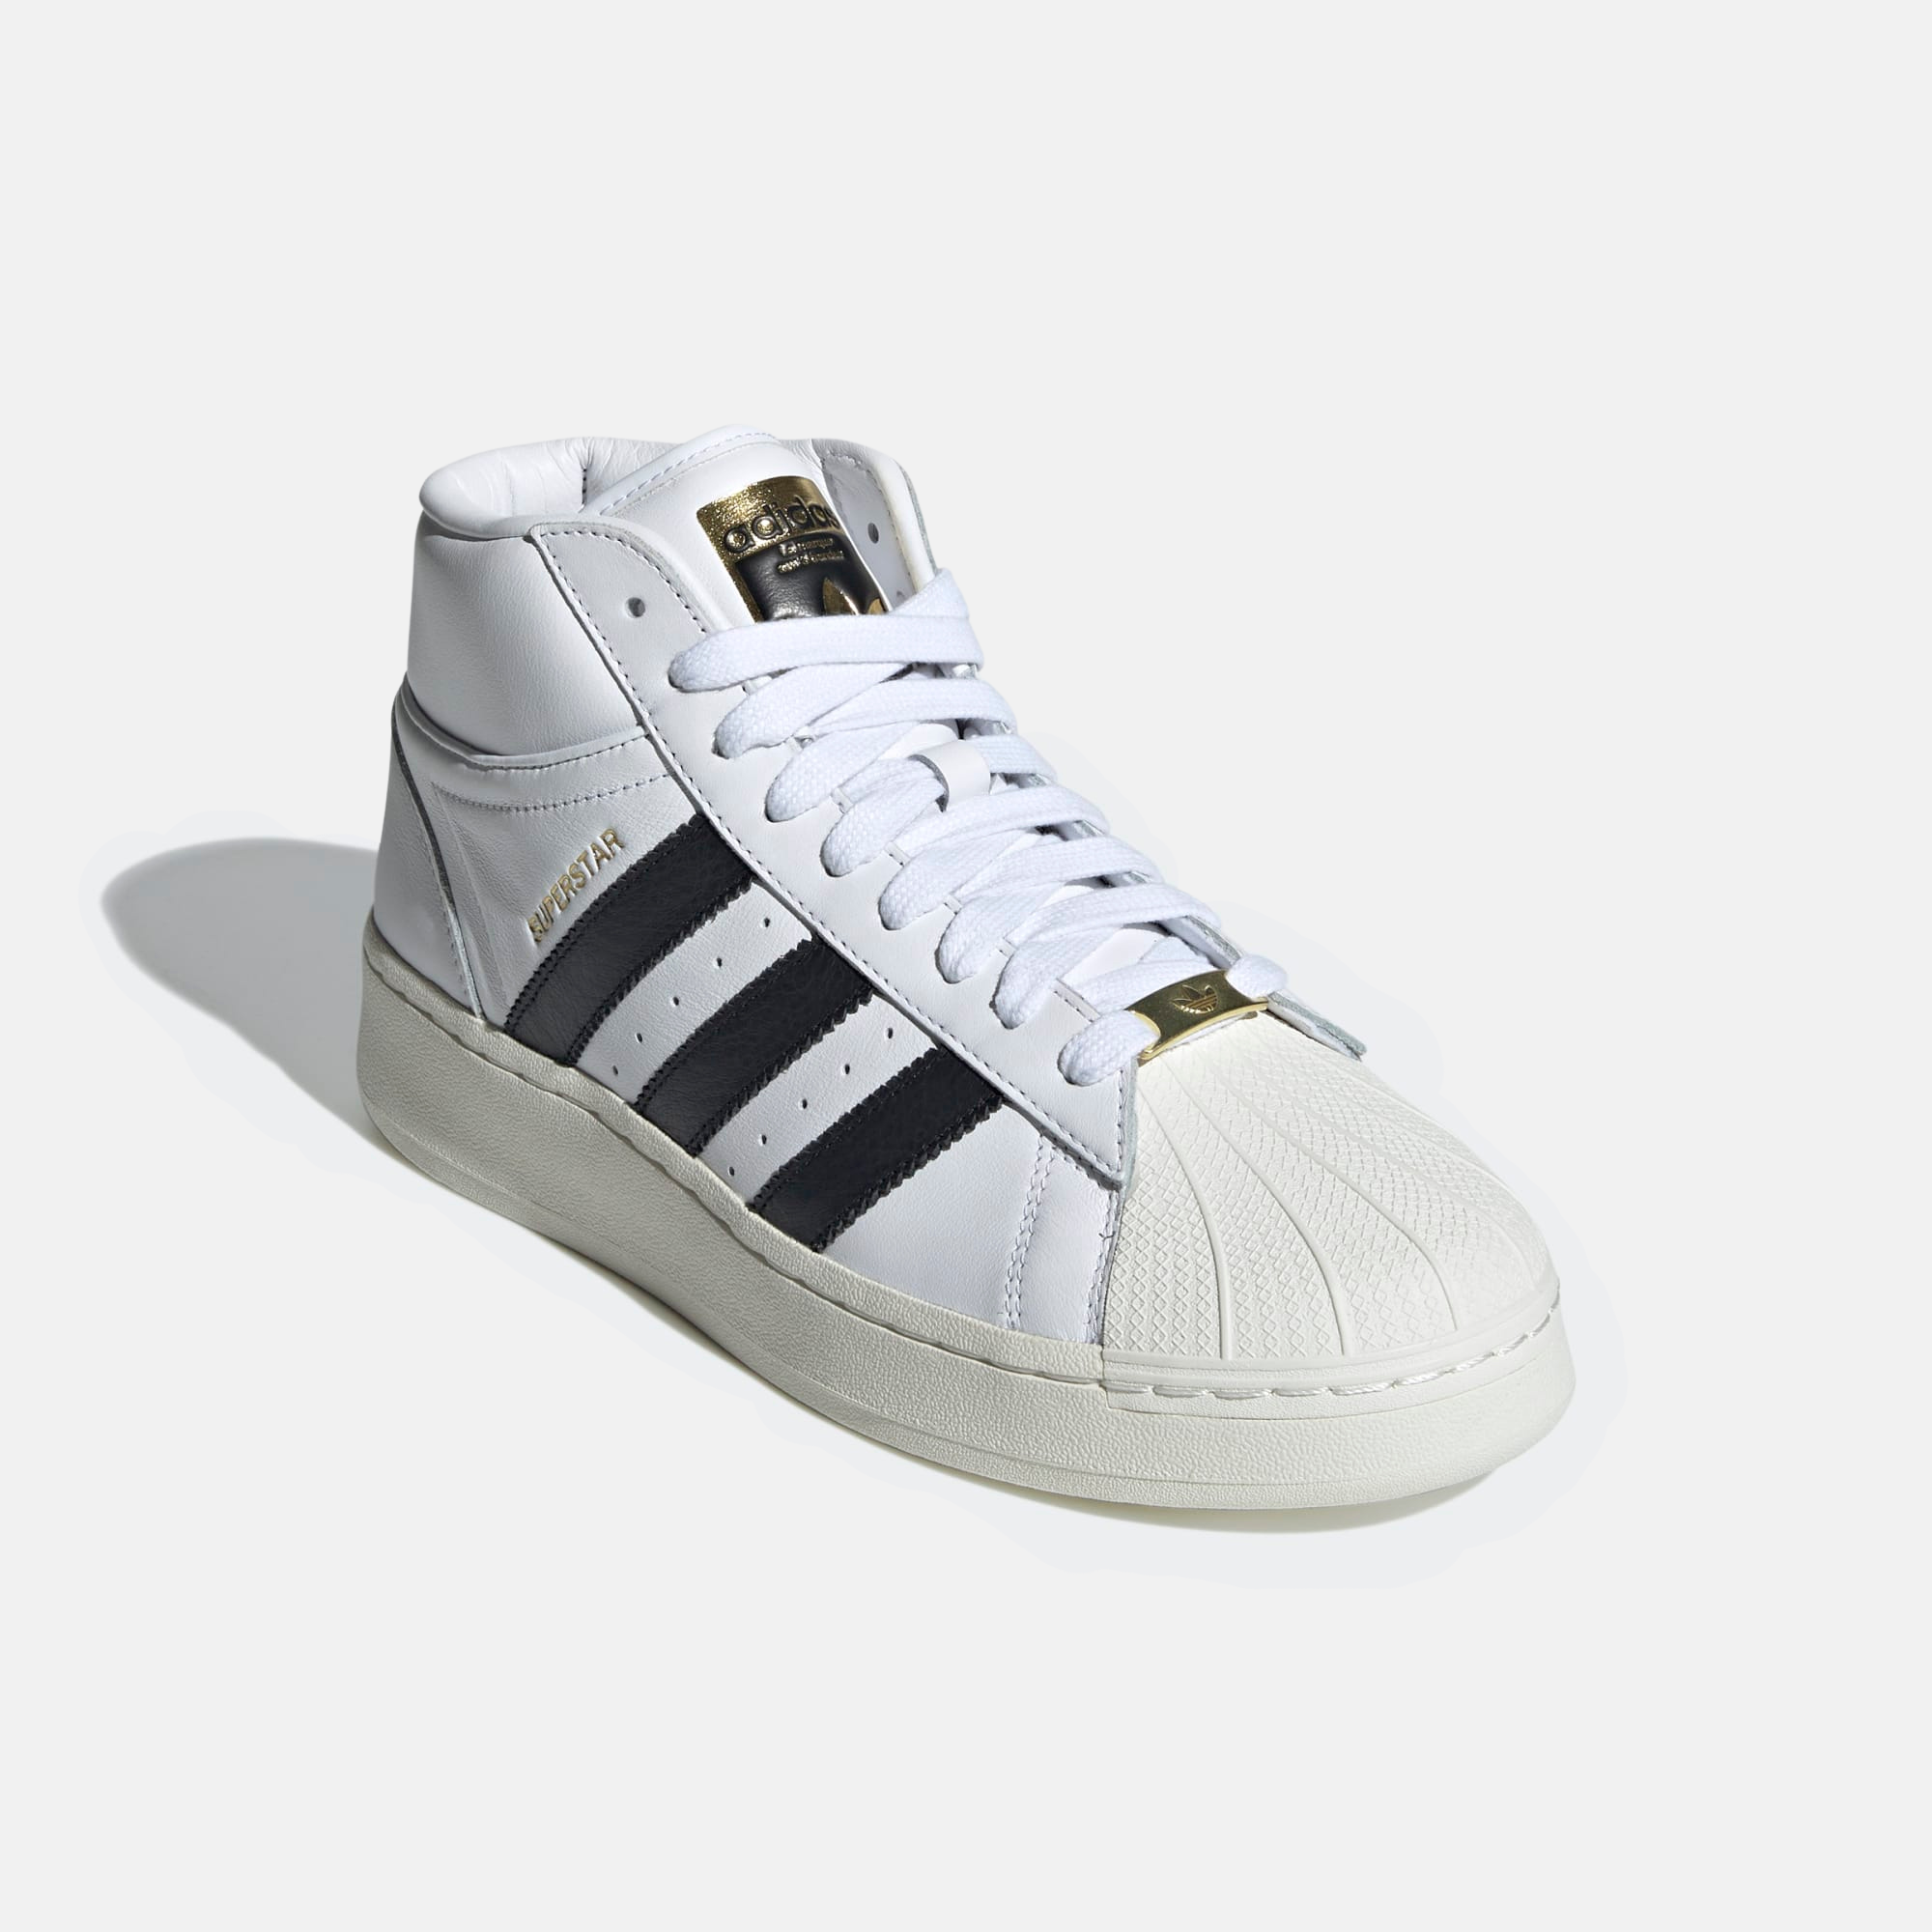 Adidas Superstar XLG Mid Vintage White Black